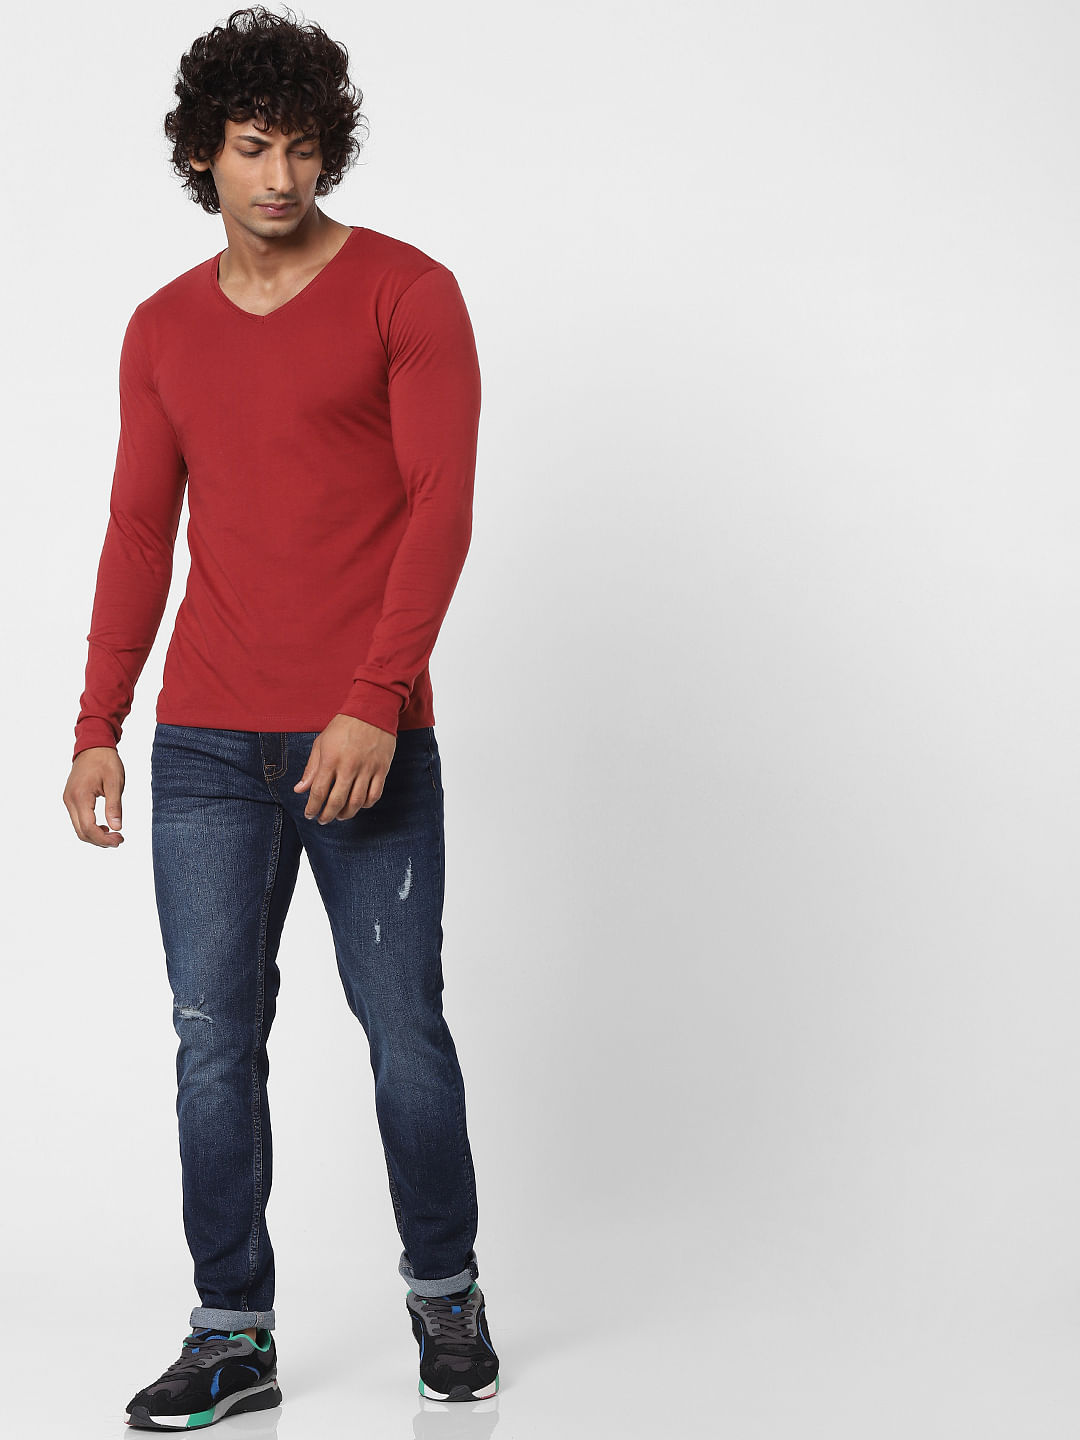 Brown Cotton Full Sleeve Premium T Shirt – The Foomer